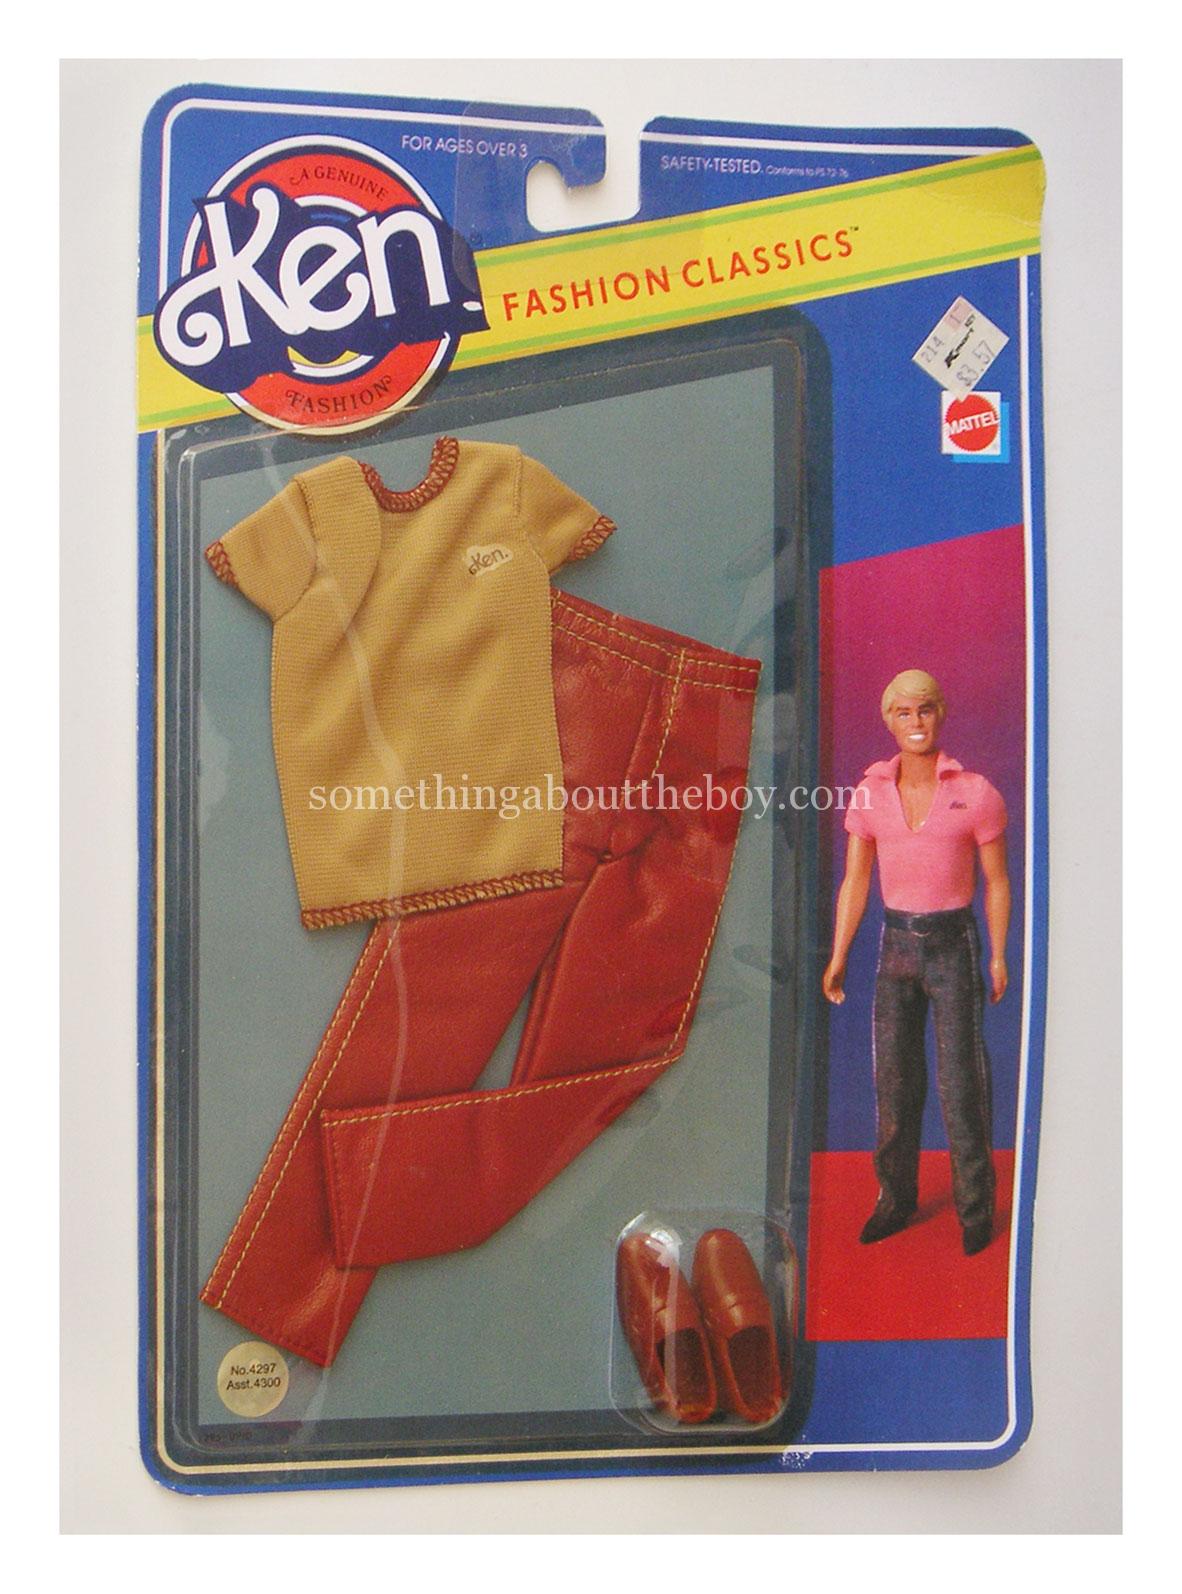 1983 Kmart Fashion Classics #4297 in original packaging